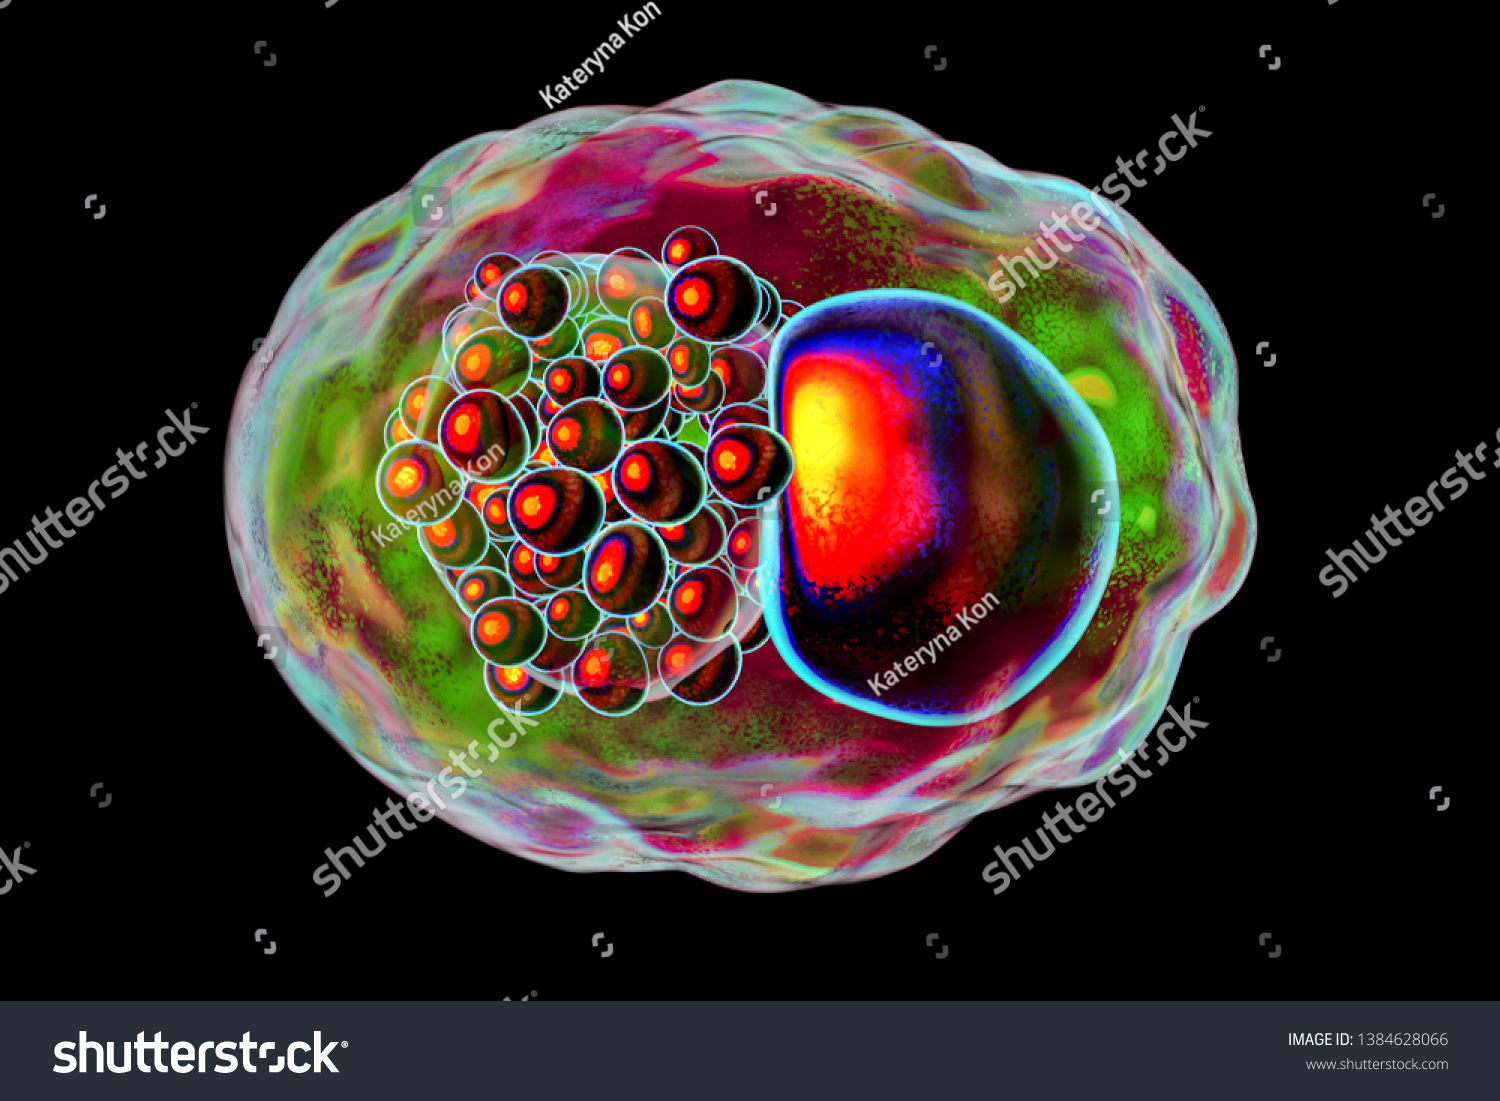 Chlamydia Trachomatis Bacteria 3d Illustration Showing Stock Illustration 1384628066 Shutterstock 8848